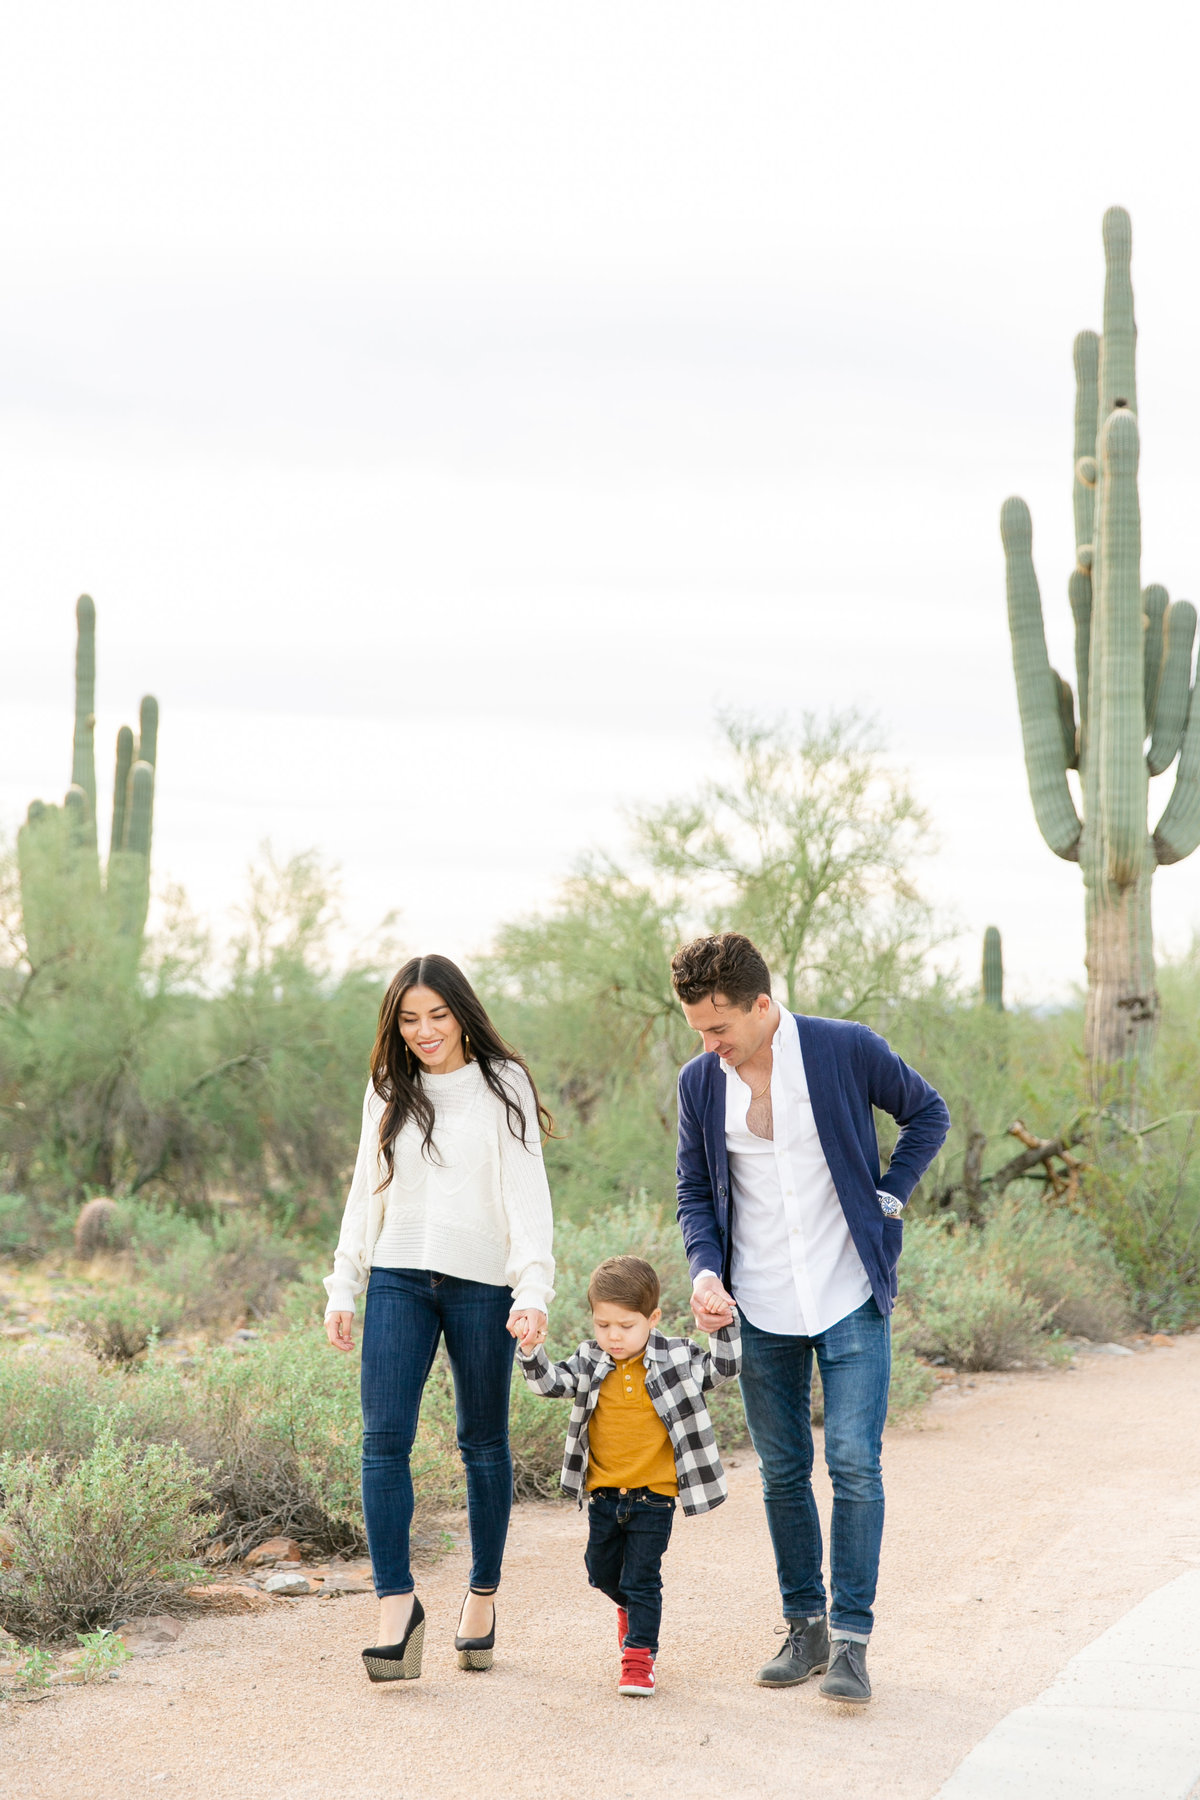 Karlie Colleen Photography - Scottsdale Arizona - Family portraits - Taylor & Family-2